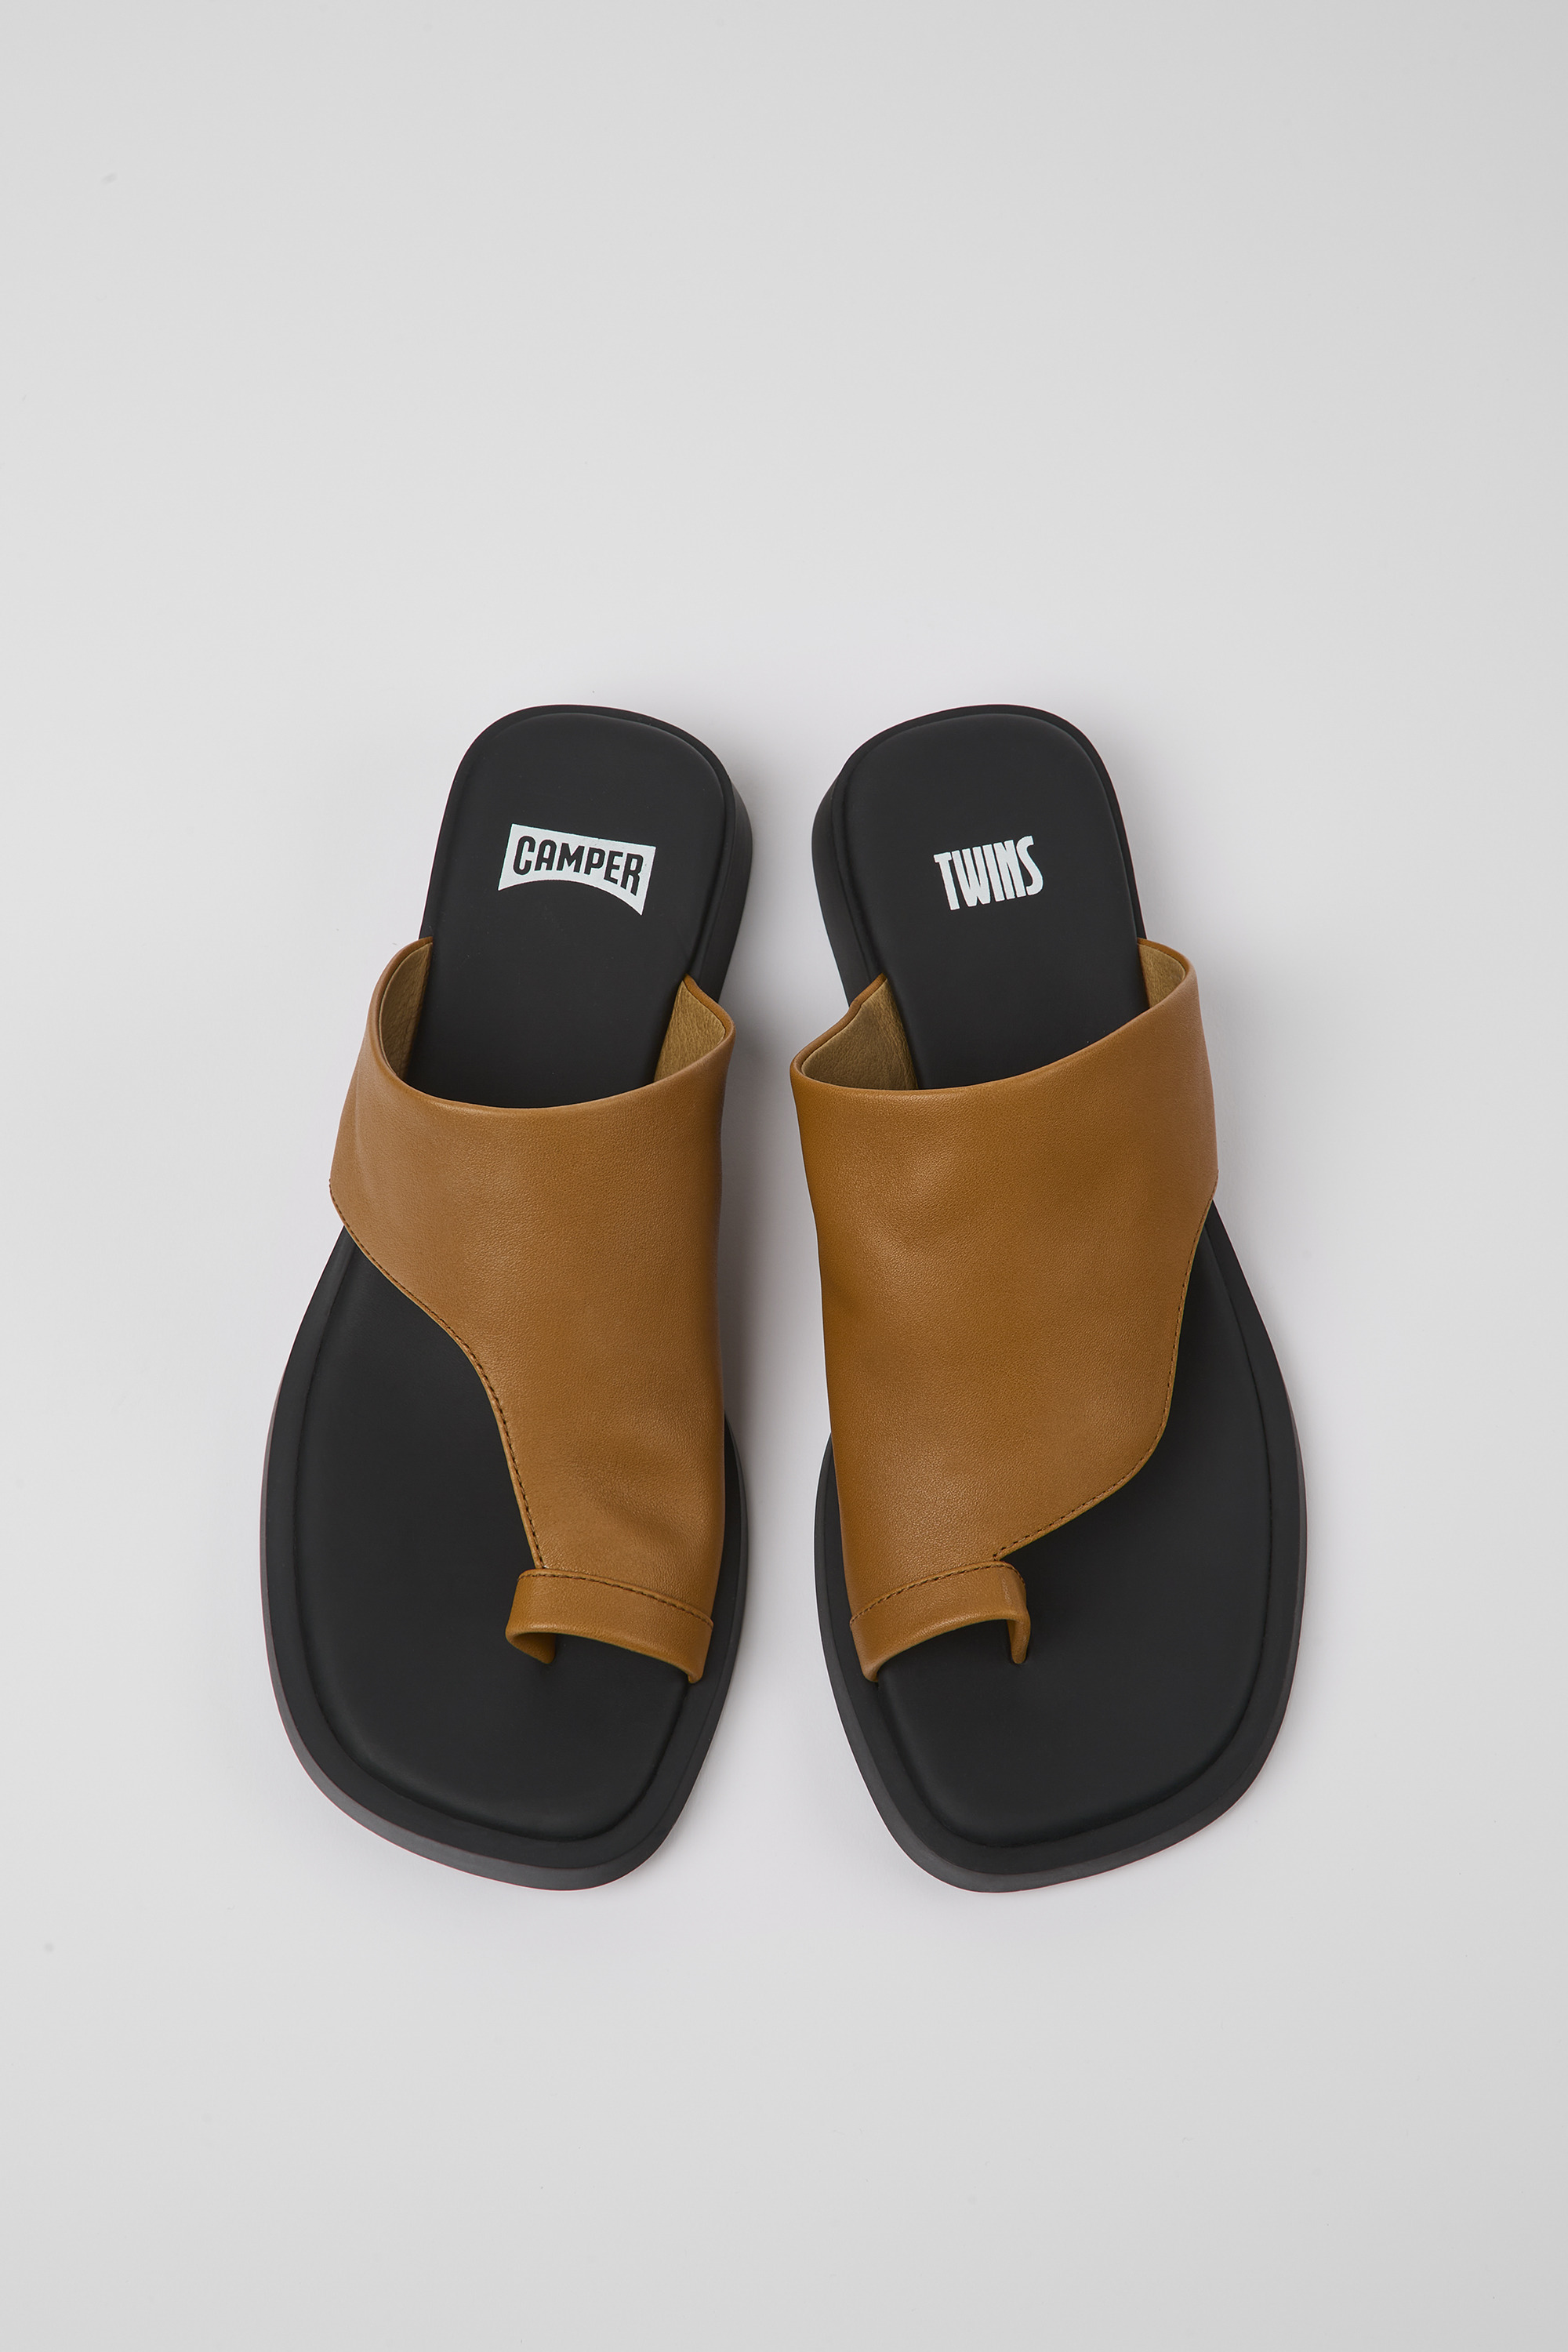 Bedrijfsomschrijving Verrassend genoeg verliezen Twins Brown Sandals for Women - Spring/Summer collection - Camper USA